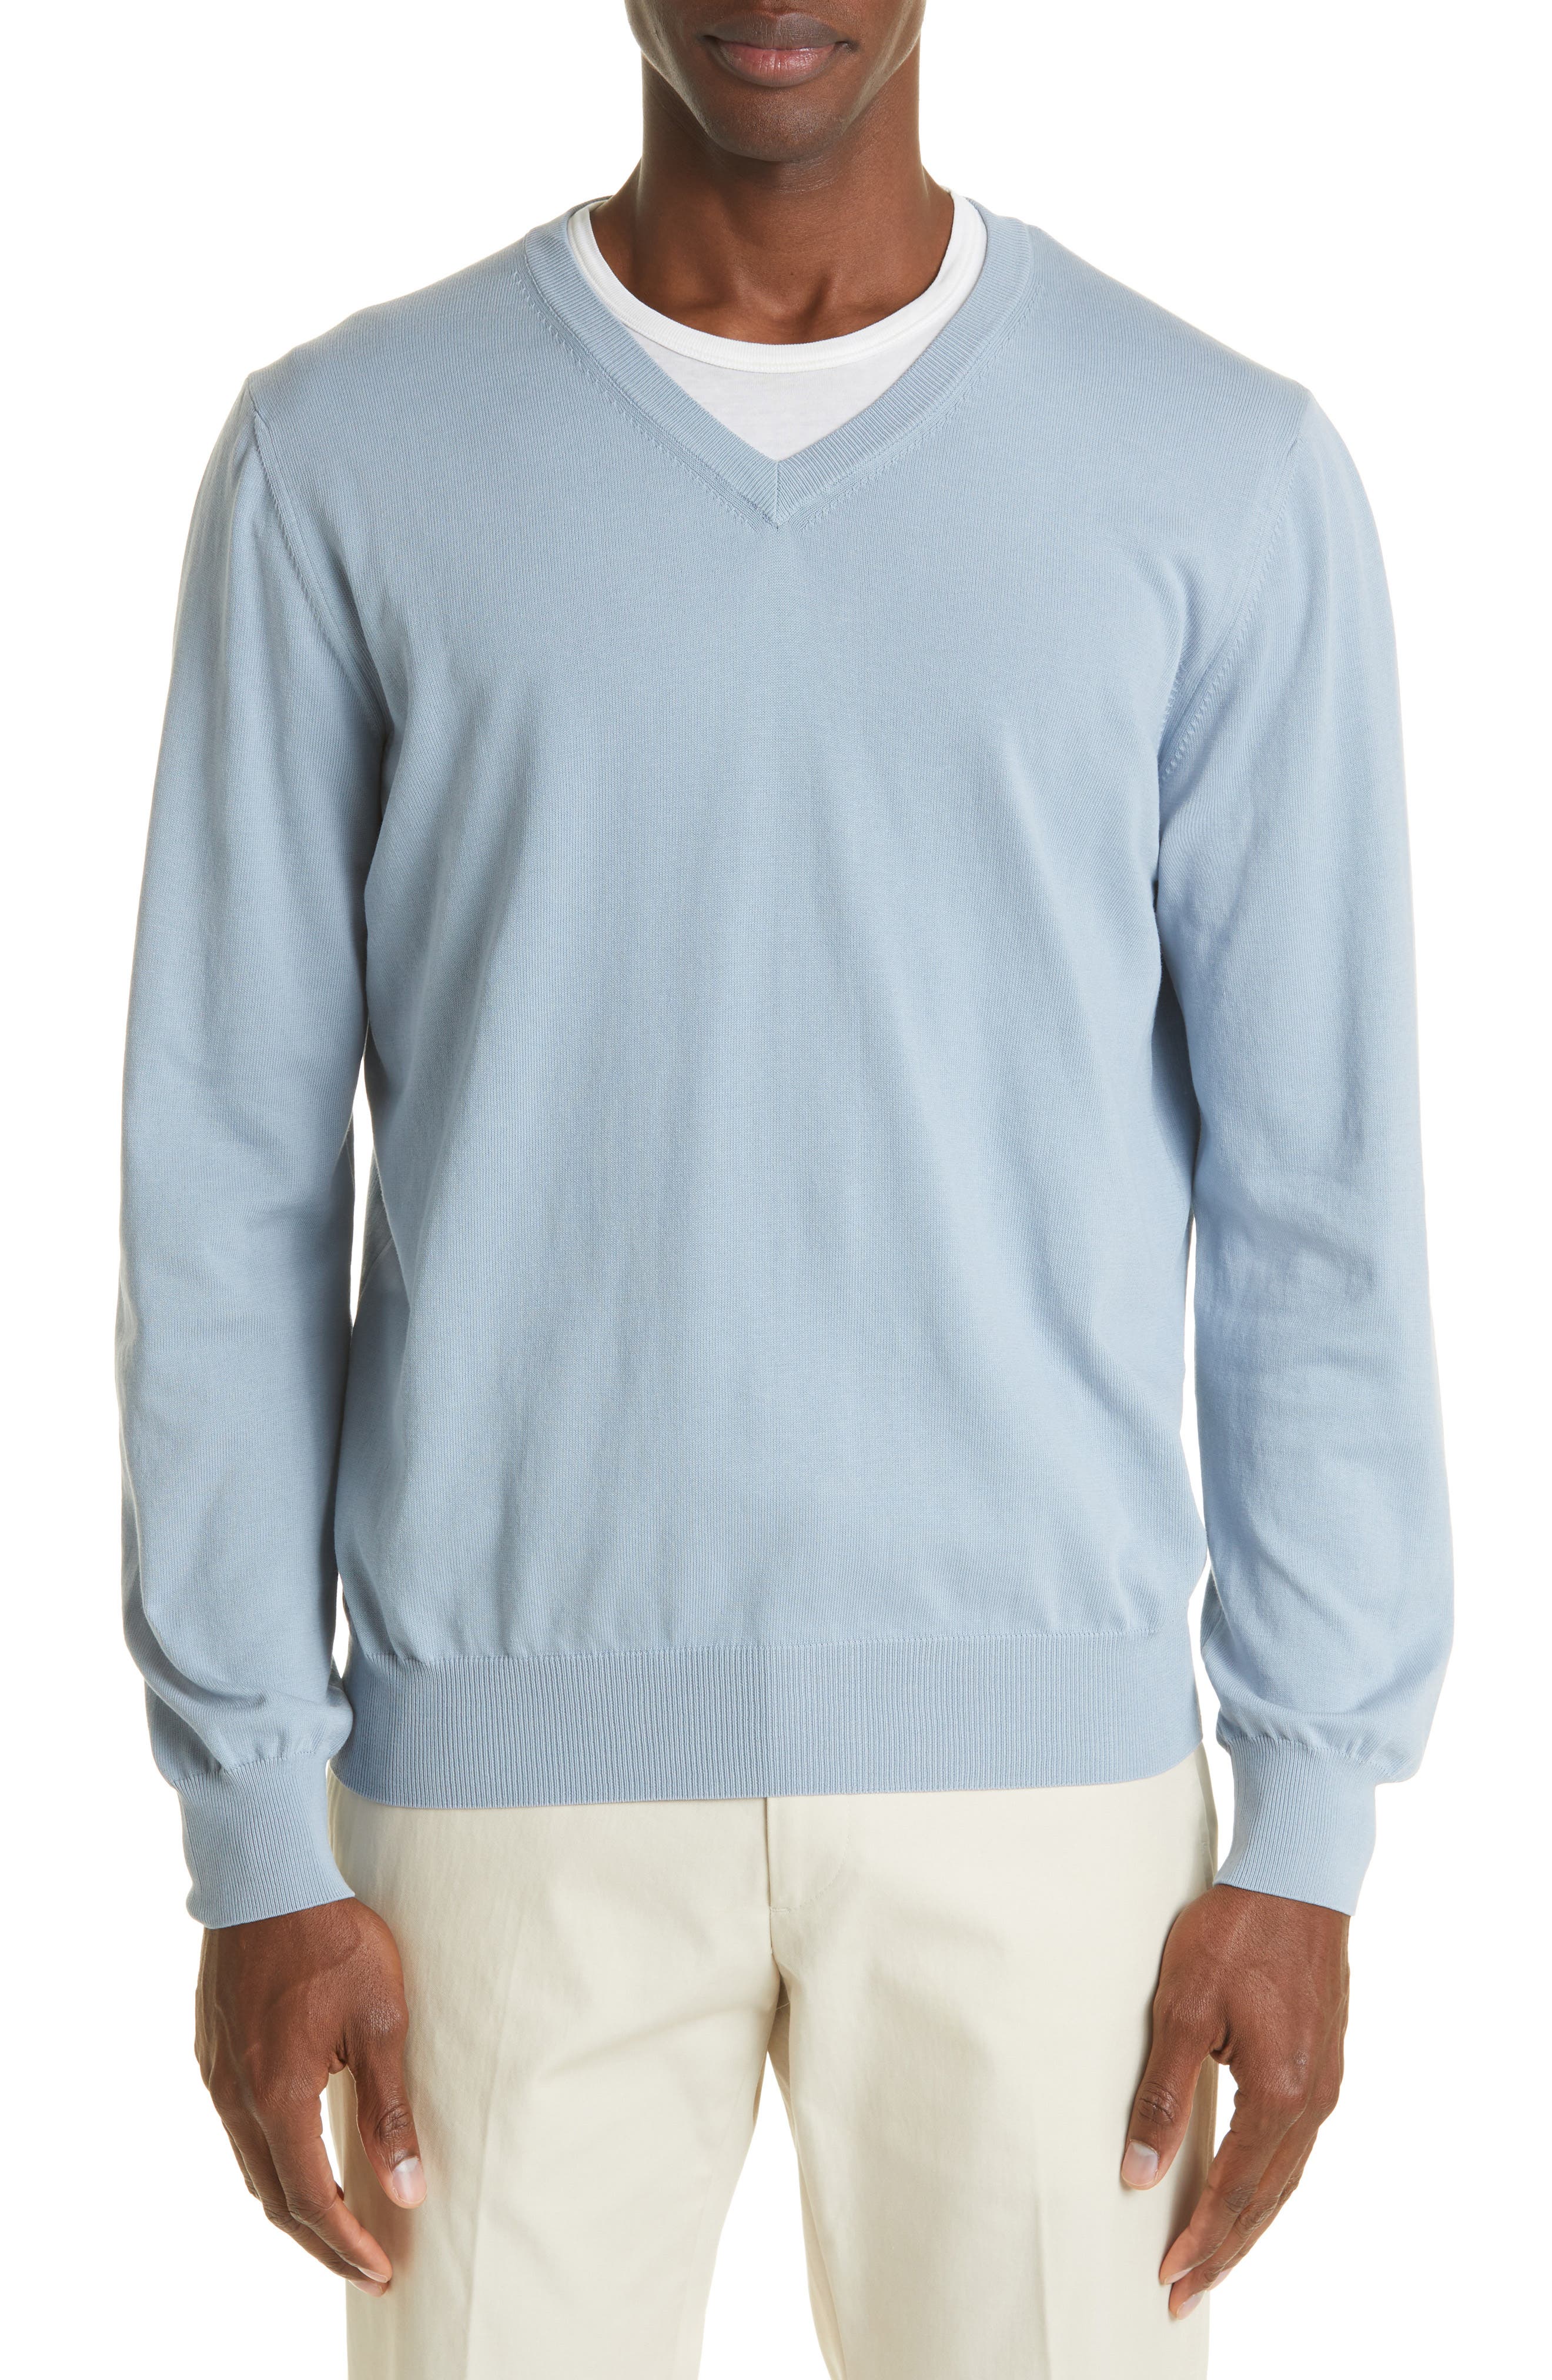 A Light Blue,M Men Sweatshirts Slim Fit Sweatshirts Winter Warm Outwear Long Sleeve V-Neck Jumpers Solid Tops Blouse